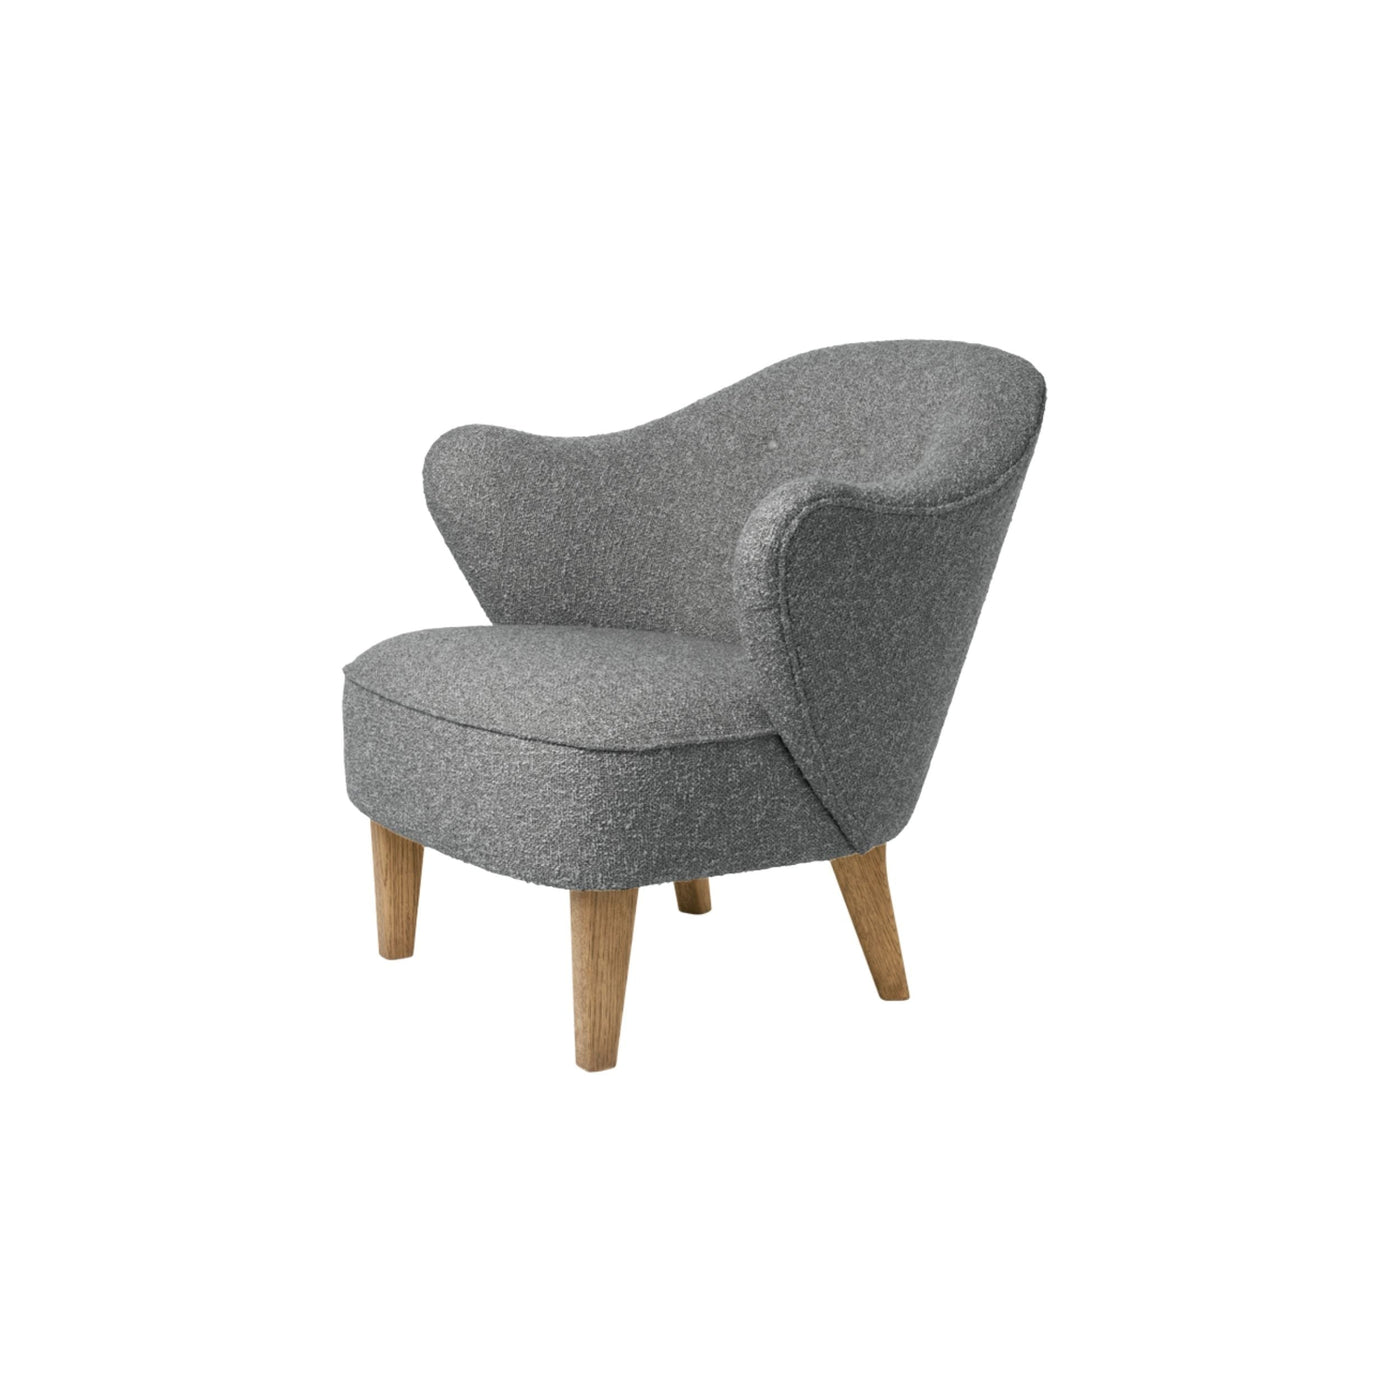 audo Ingeborg armchair. Made to order from someday designs #colour_vidar-133